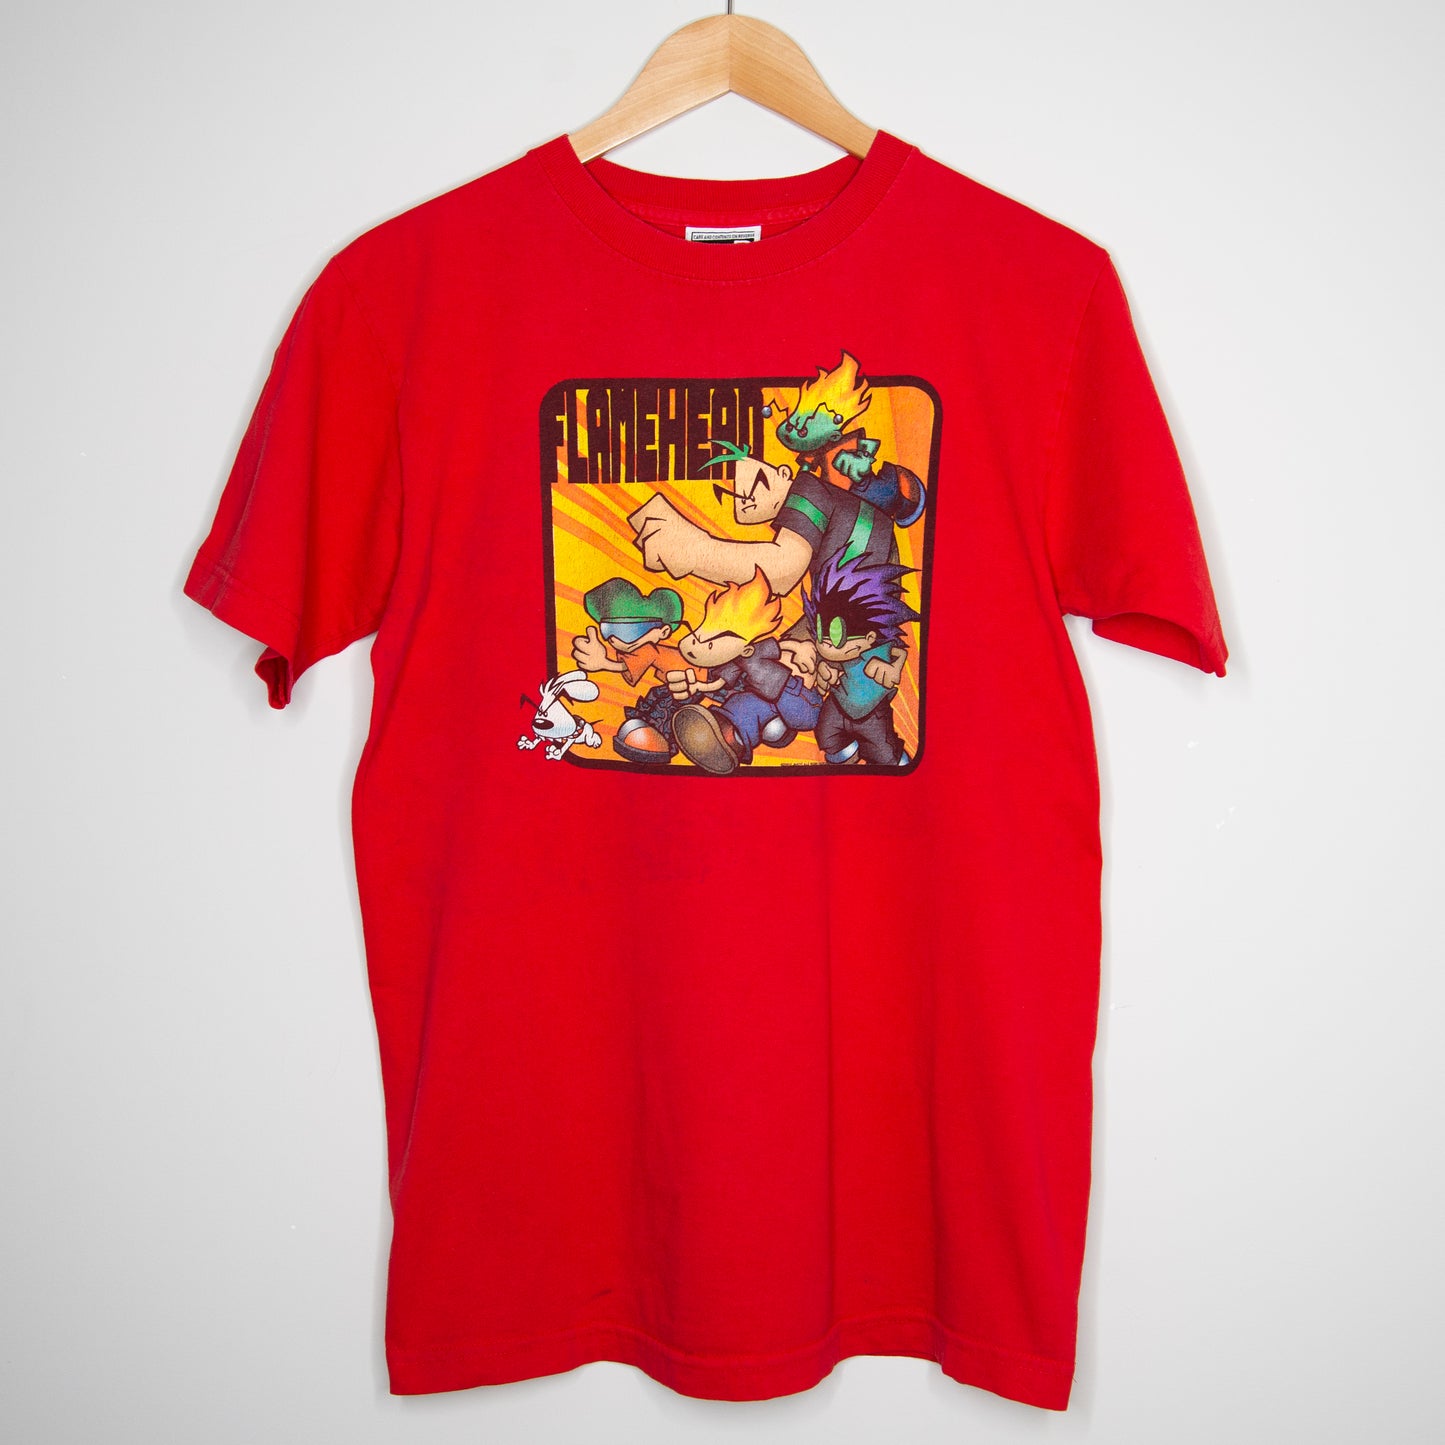 2000 JNCO 'Flamehead' T-Shirt Large